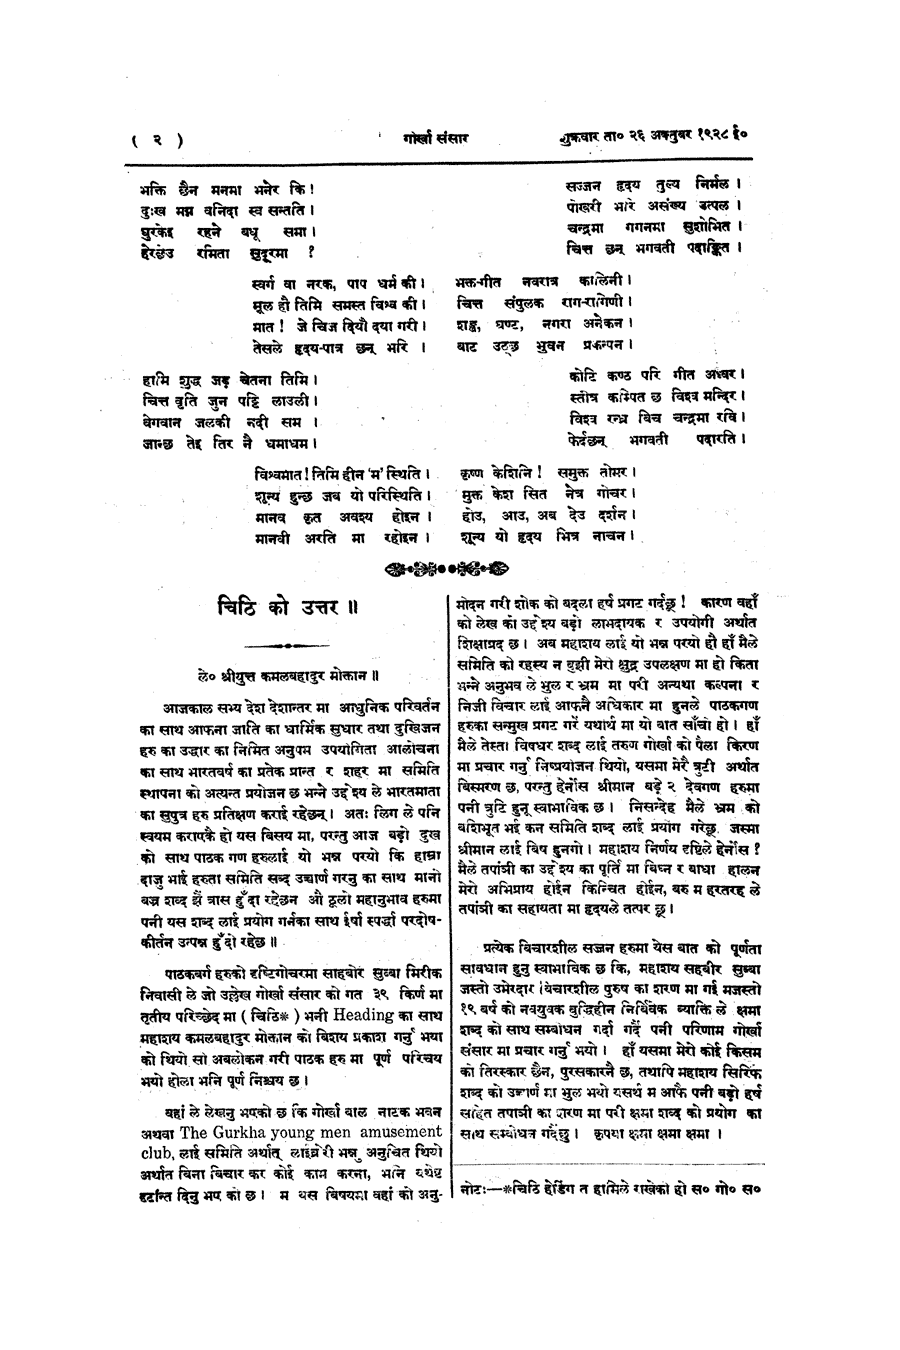 Gorkha Sansar, 26 Oct 1928, page 2